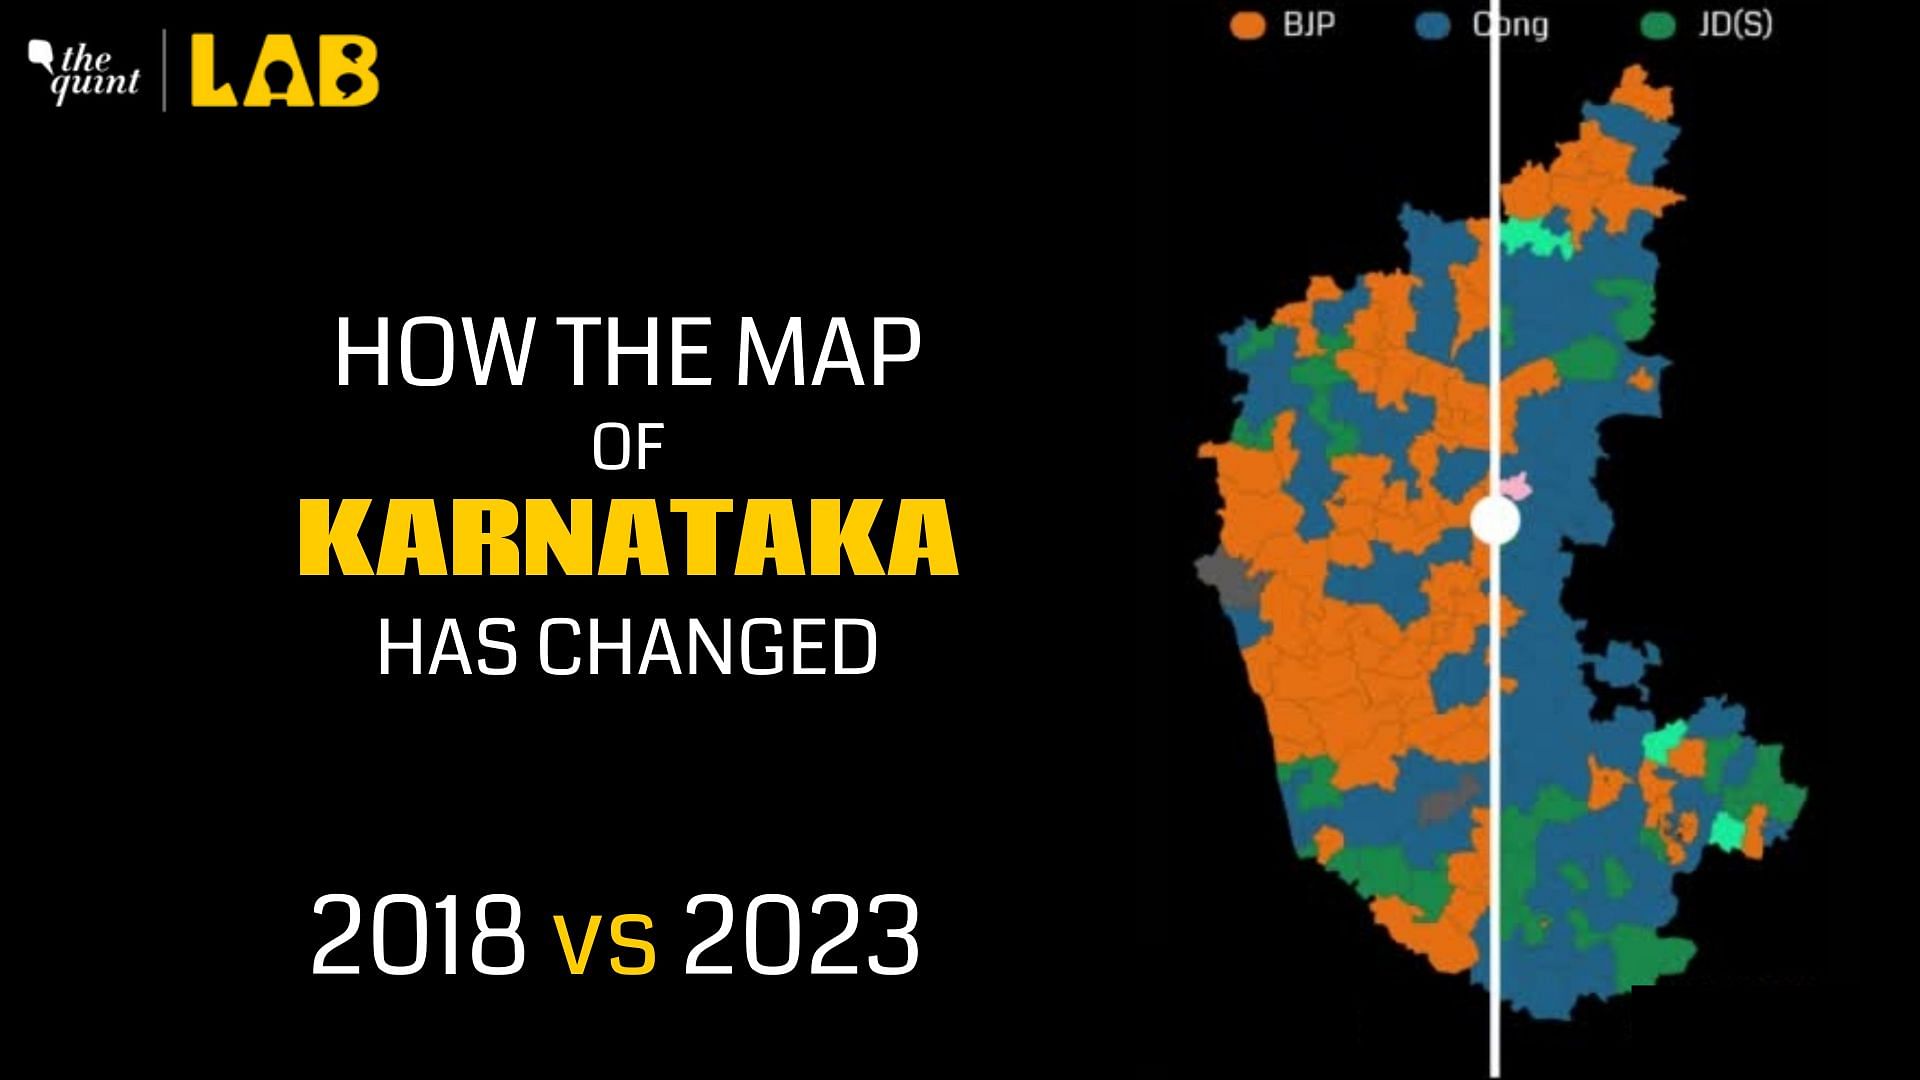 HOW THE MAP OF KARNATAKA 